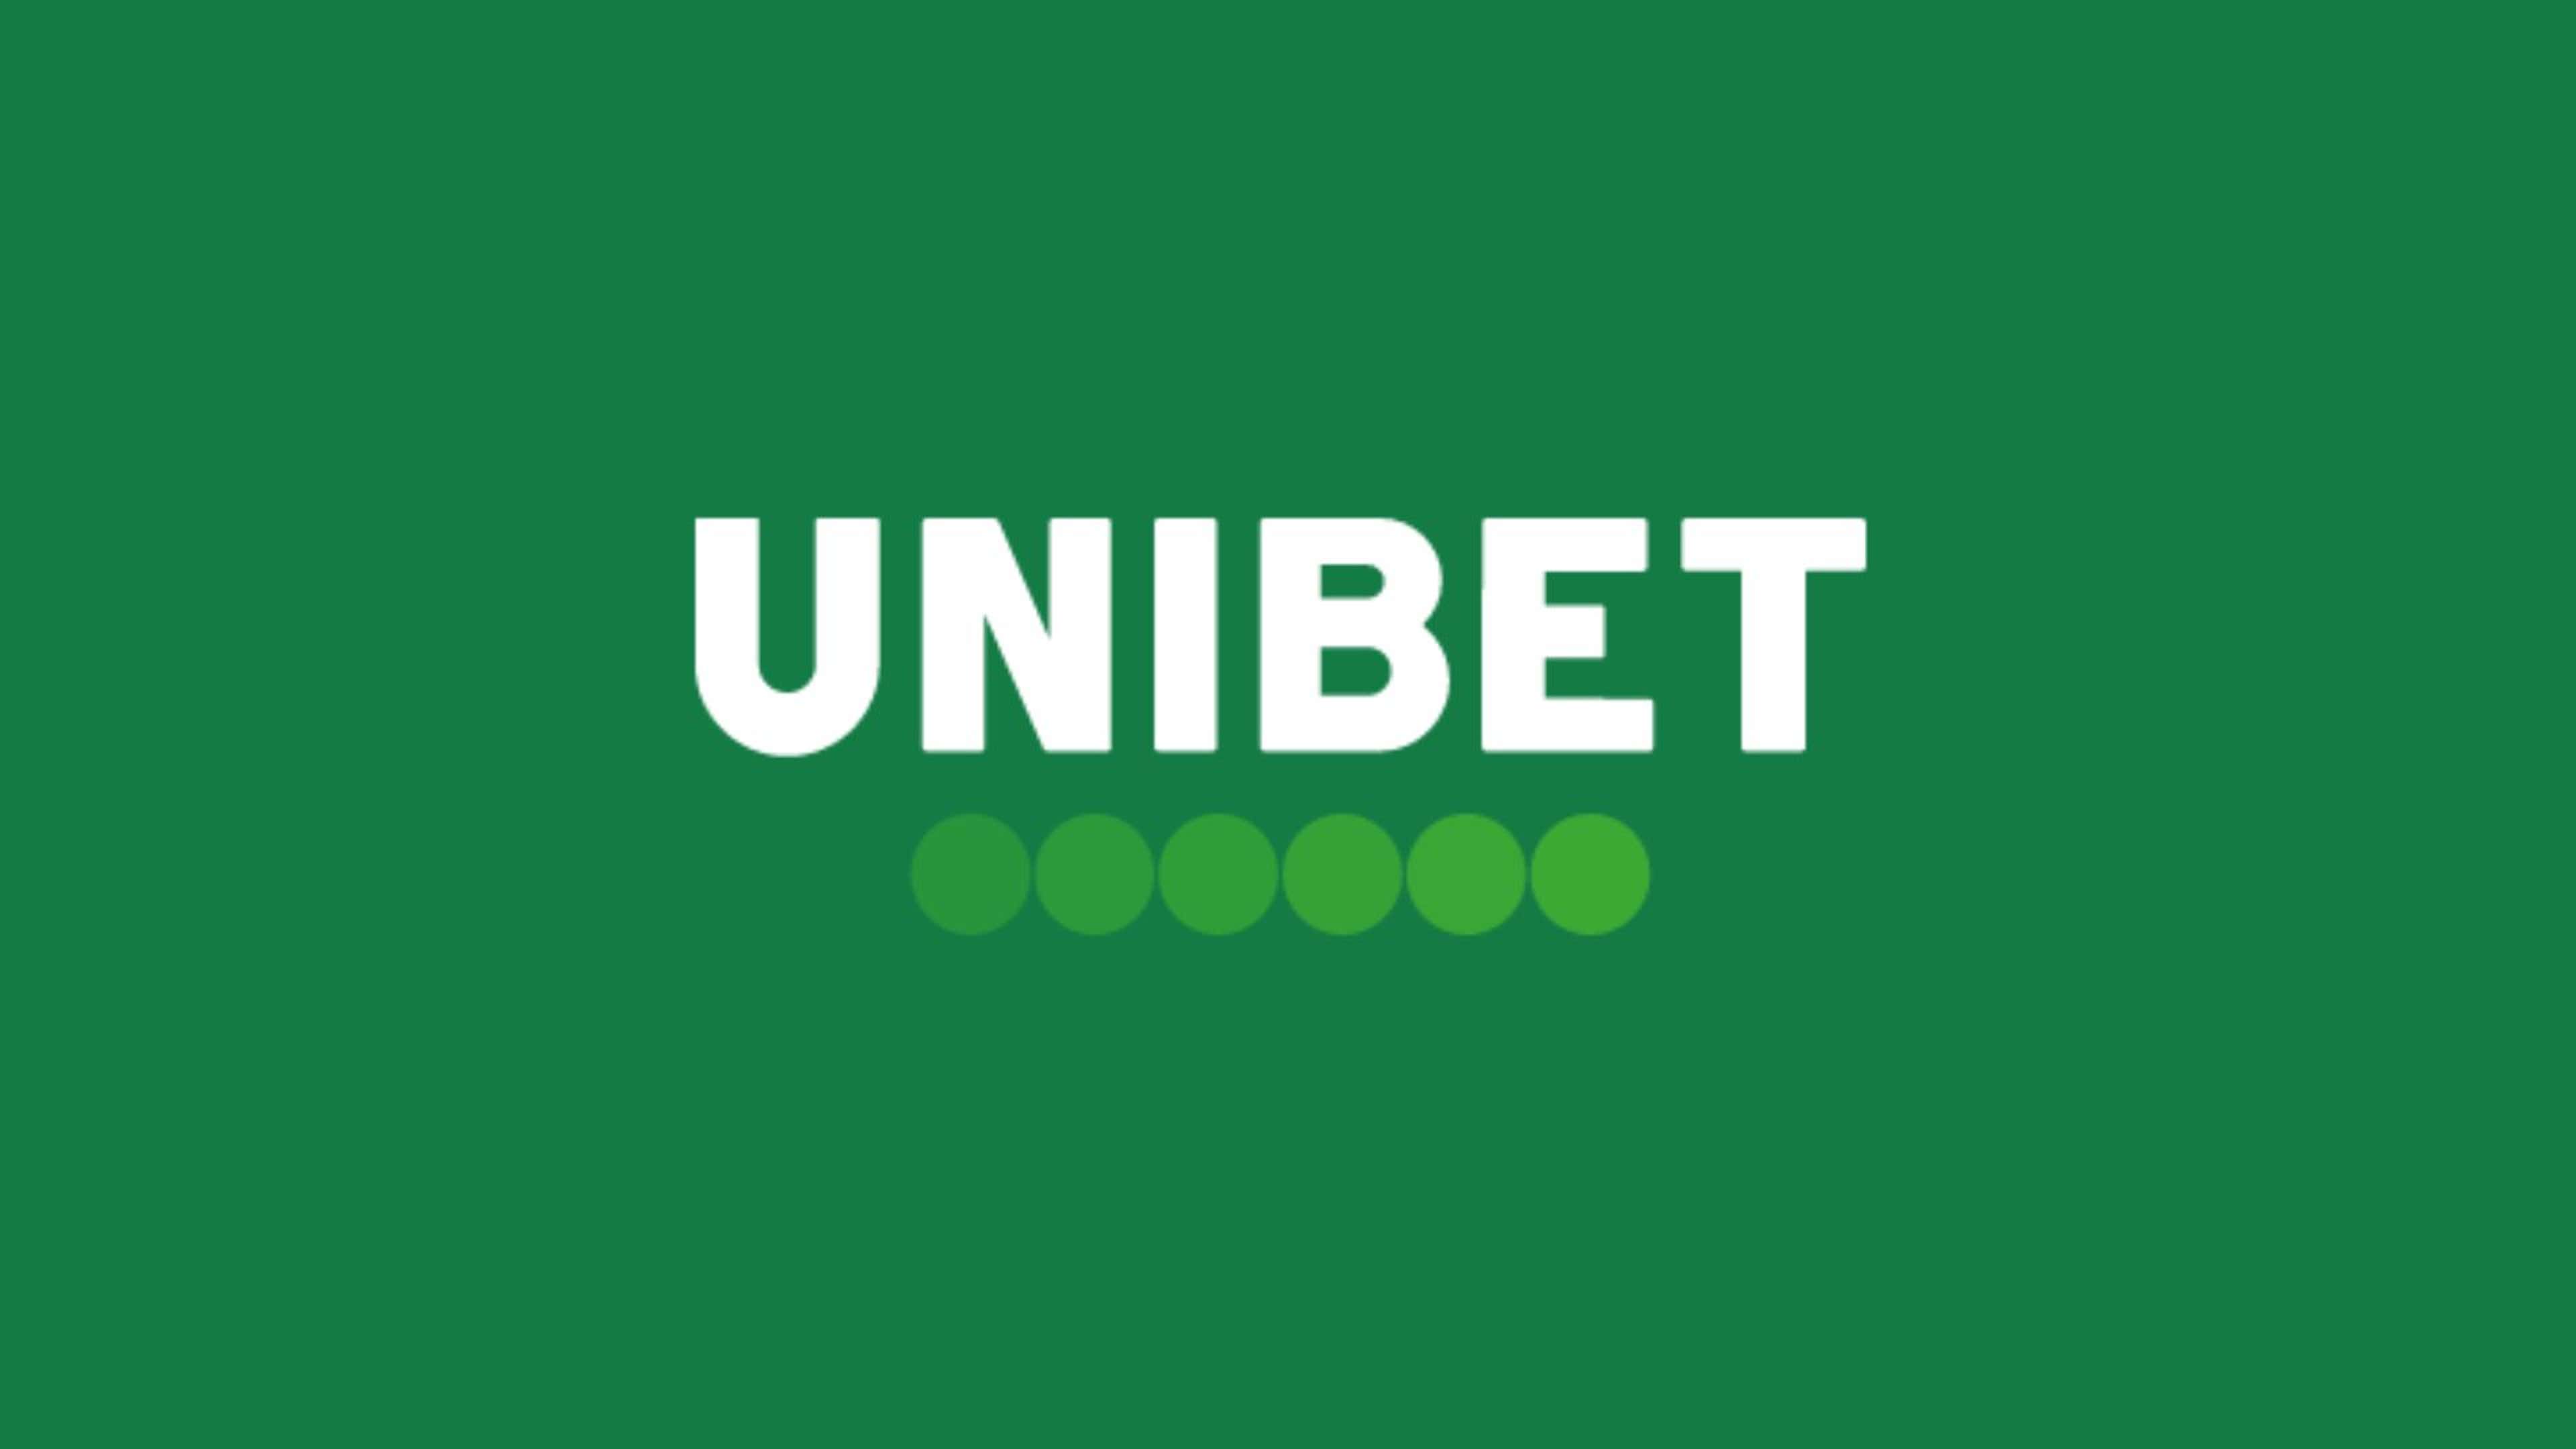 unibet casino sign up offer